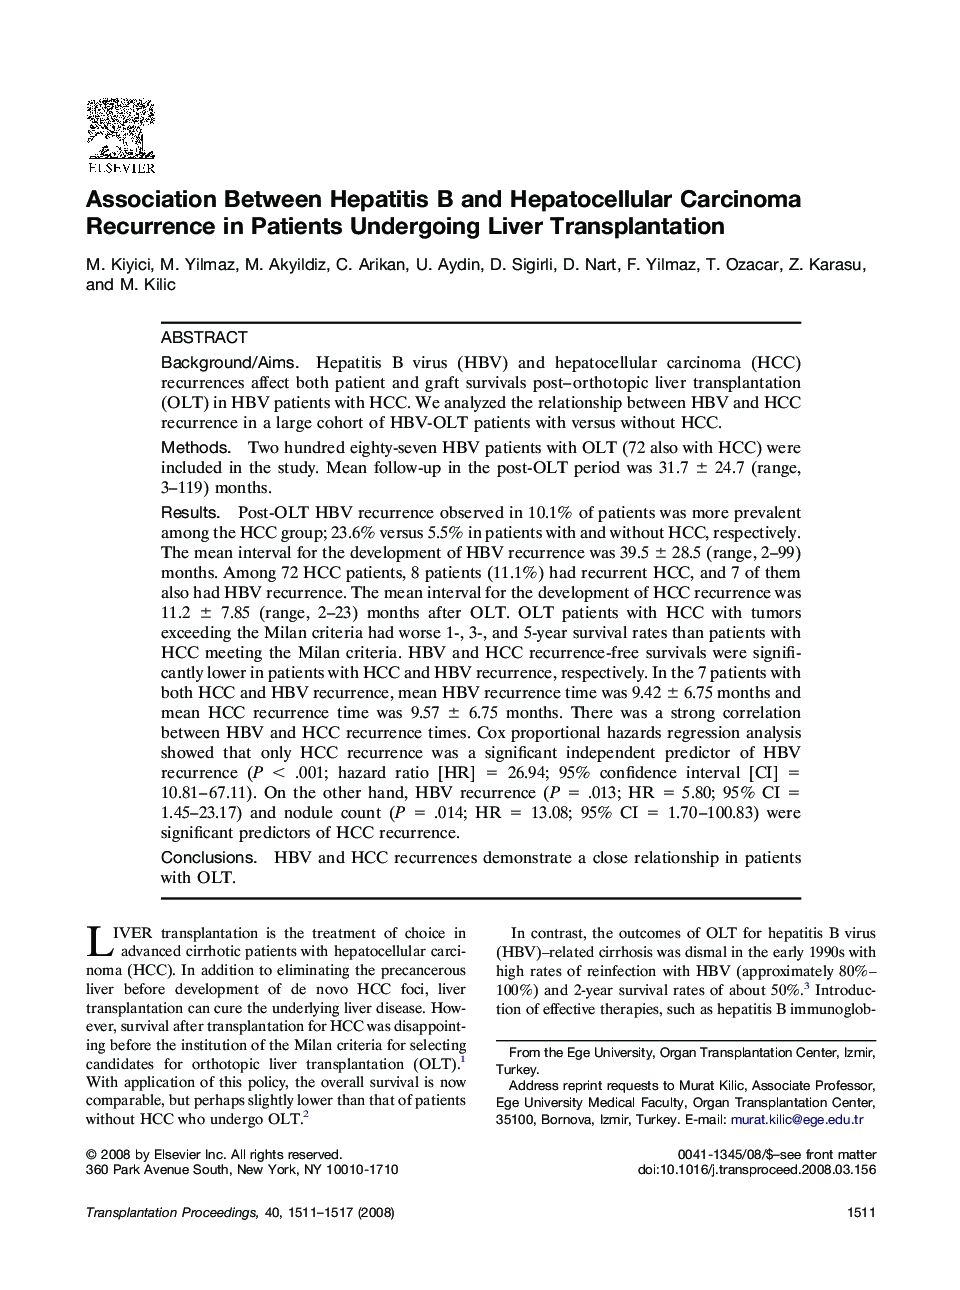 Association Between Hepatitis B and Hepatocellular Carcinoma Recurrence in Patients Undergoing Liver Transplantation